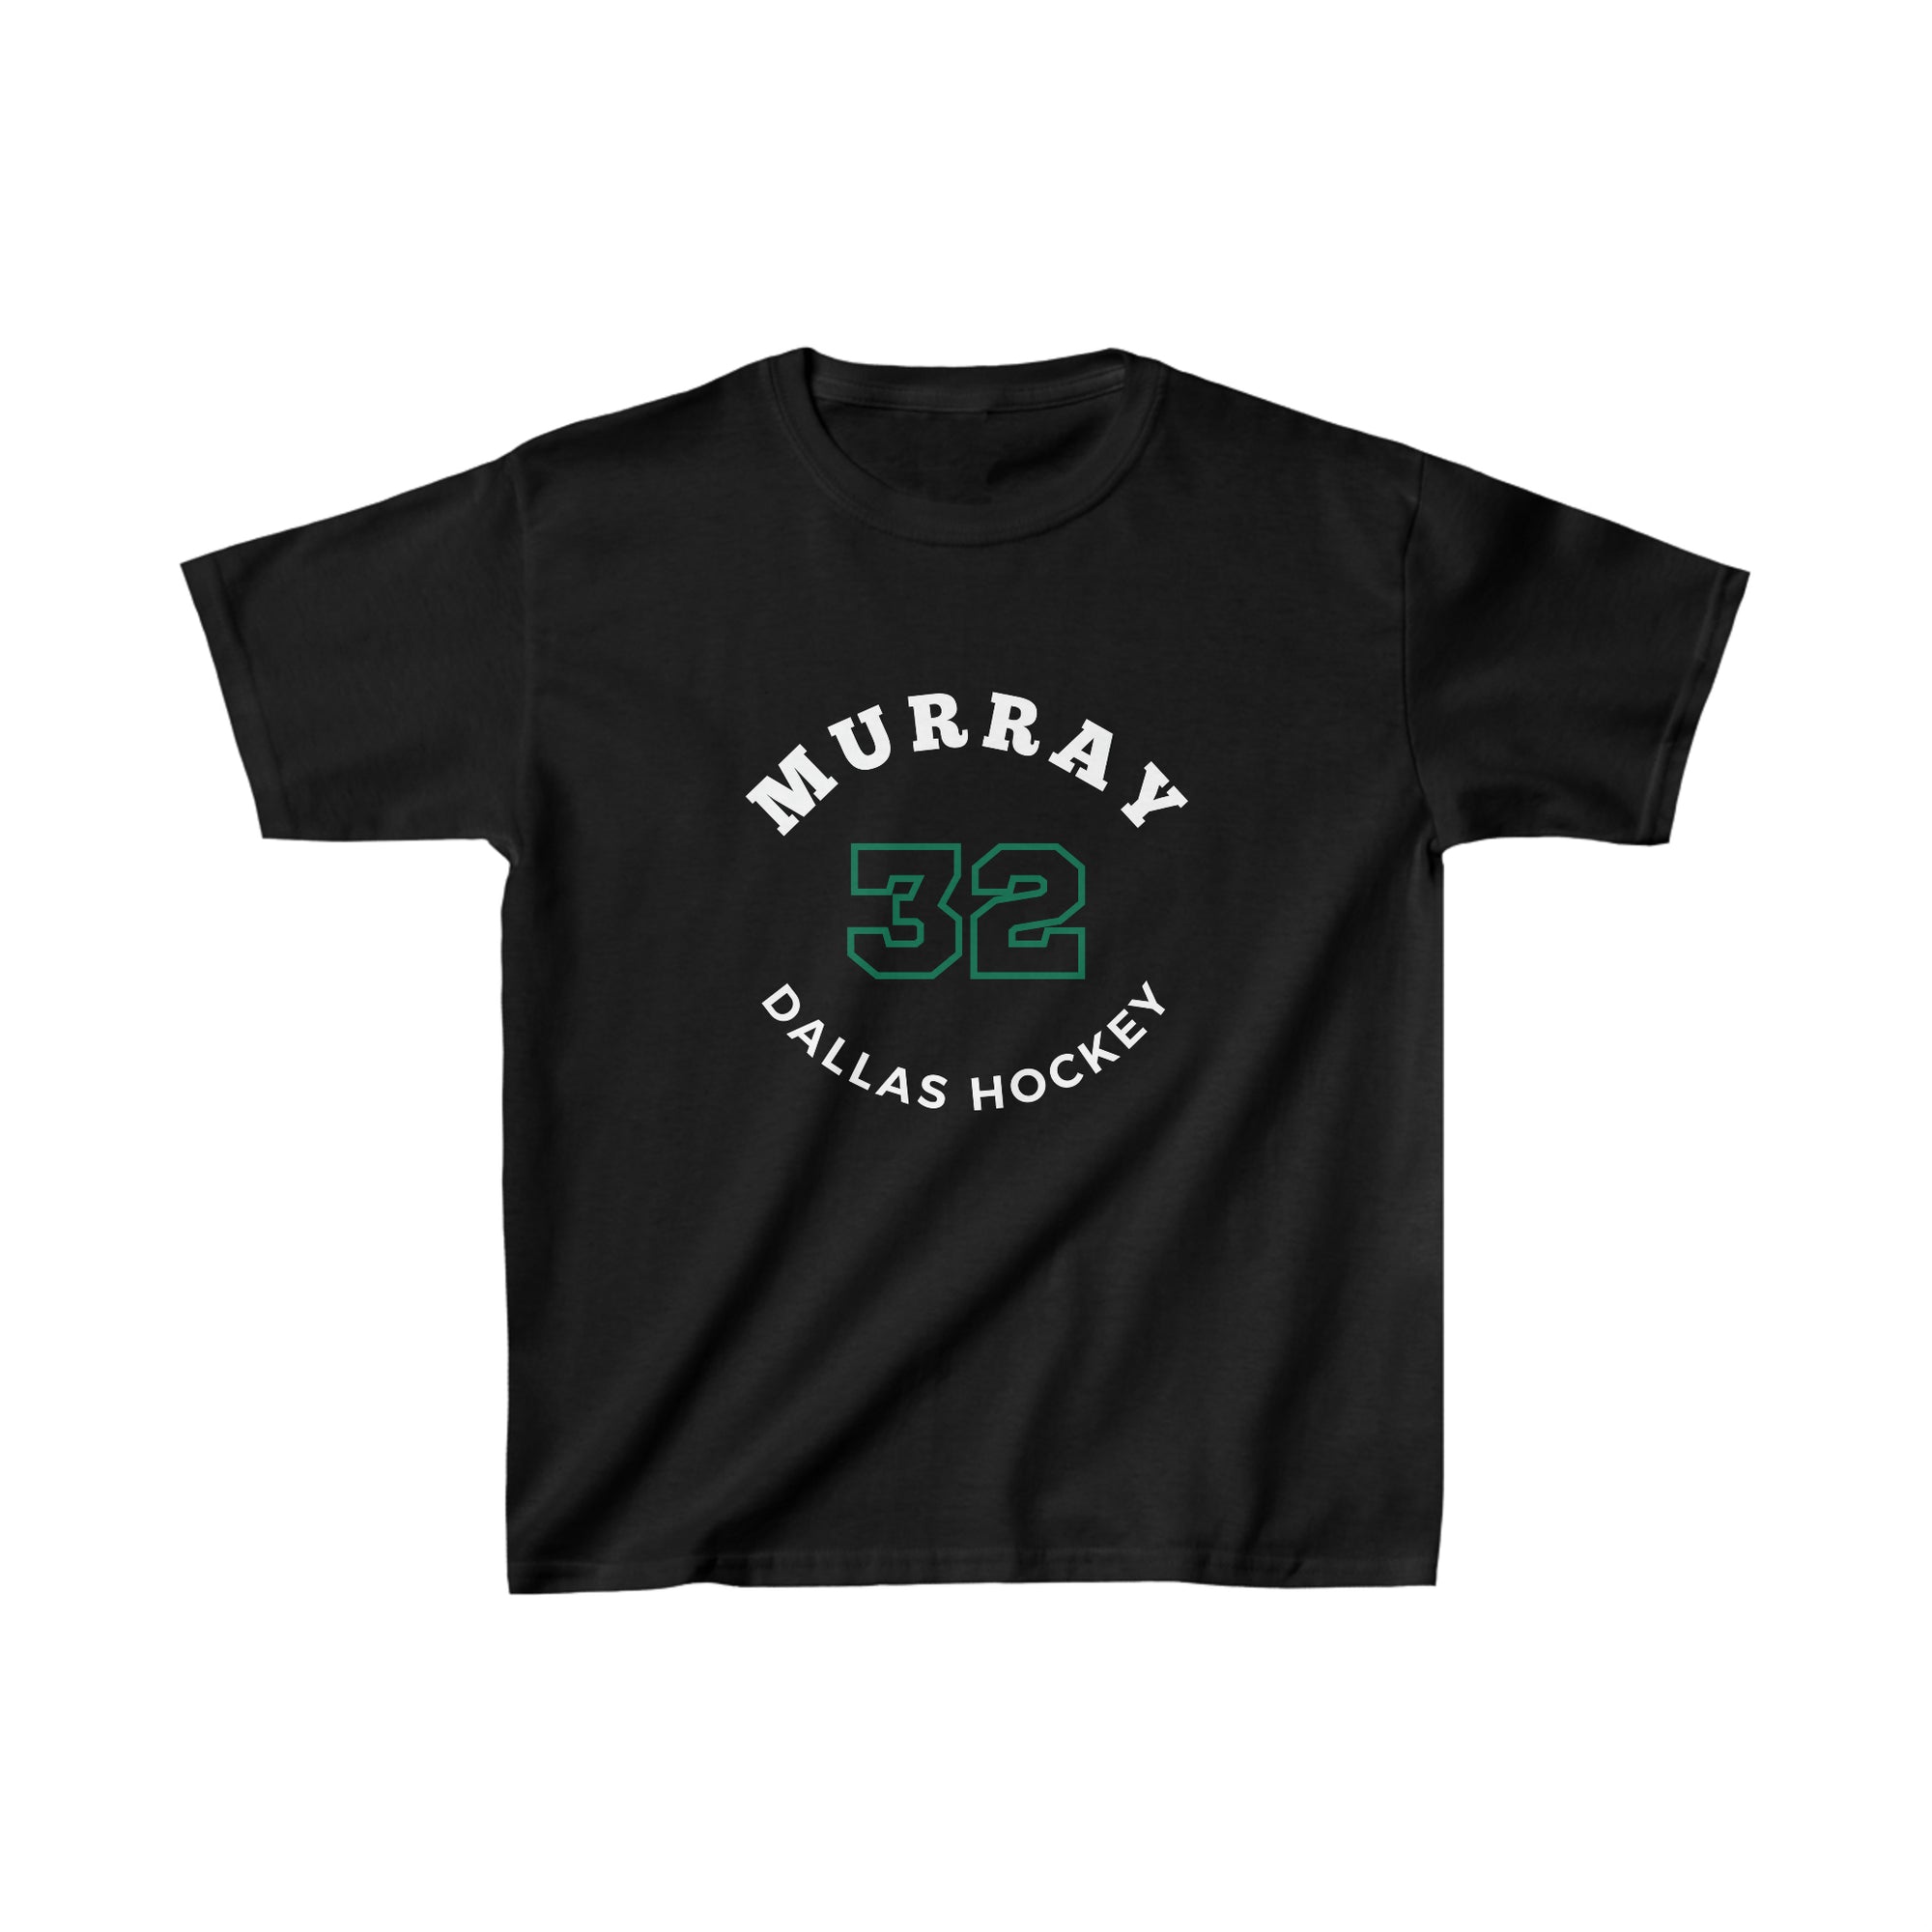 Murray 32 Dallas Hockey Number Arch Design Kids Tee